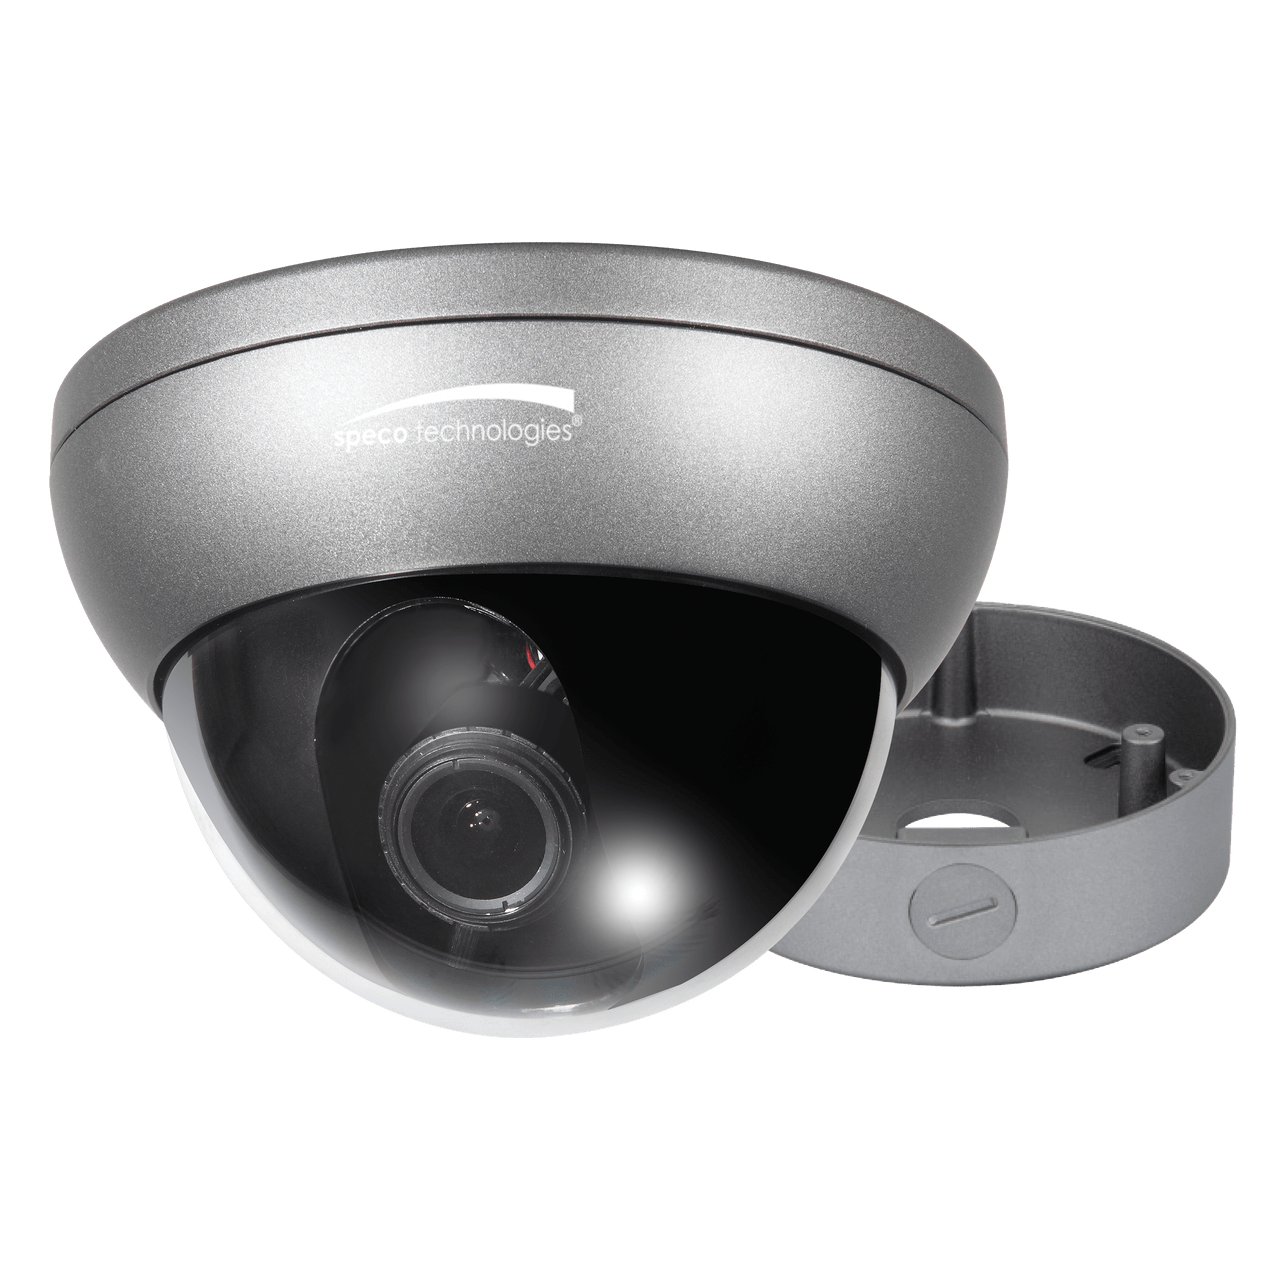 Speco Technologies SPE-HT7250T 2MP HD-TVI IntensifierT Vandal Dome Camera, 5-50mm lens, Grey Housing, Included (SPE-HT7250T)